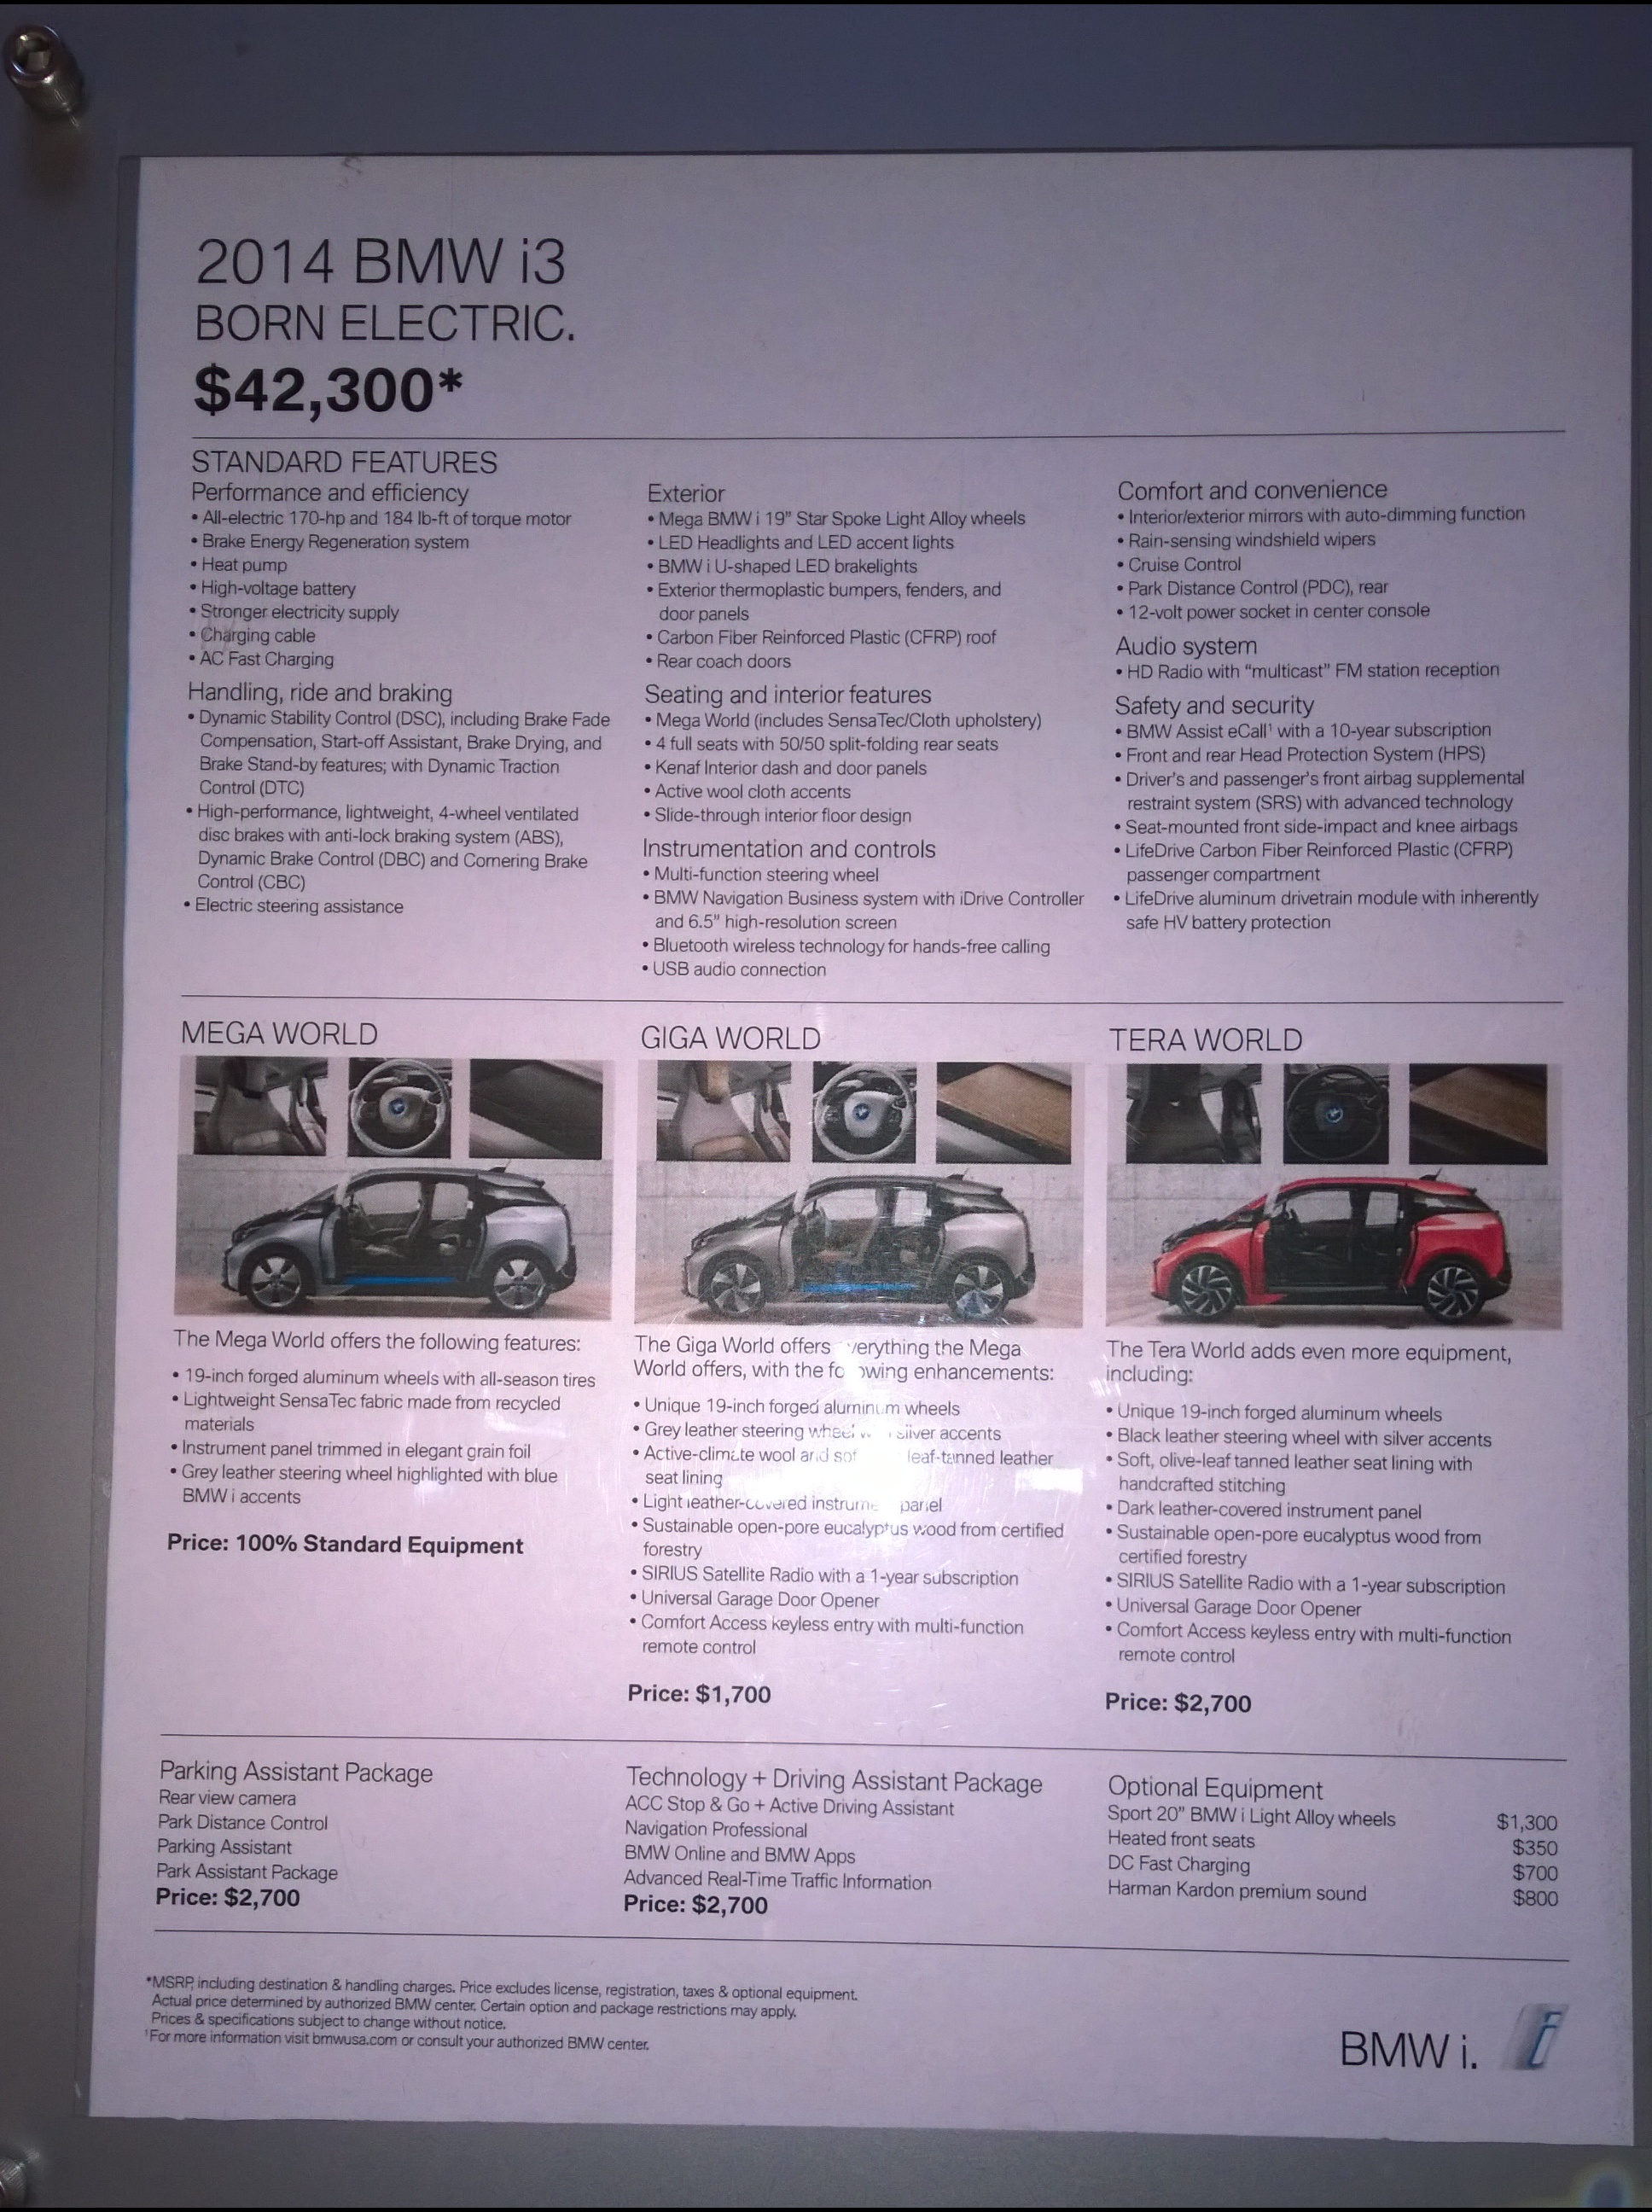 BMW Electric price tag.jpg